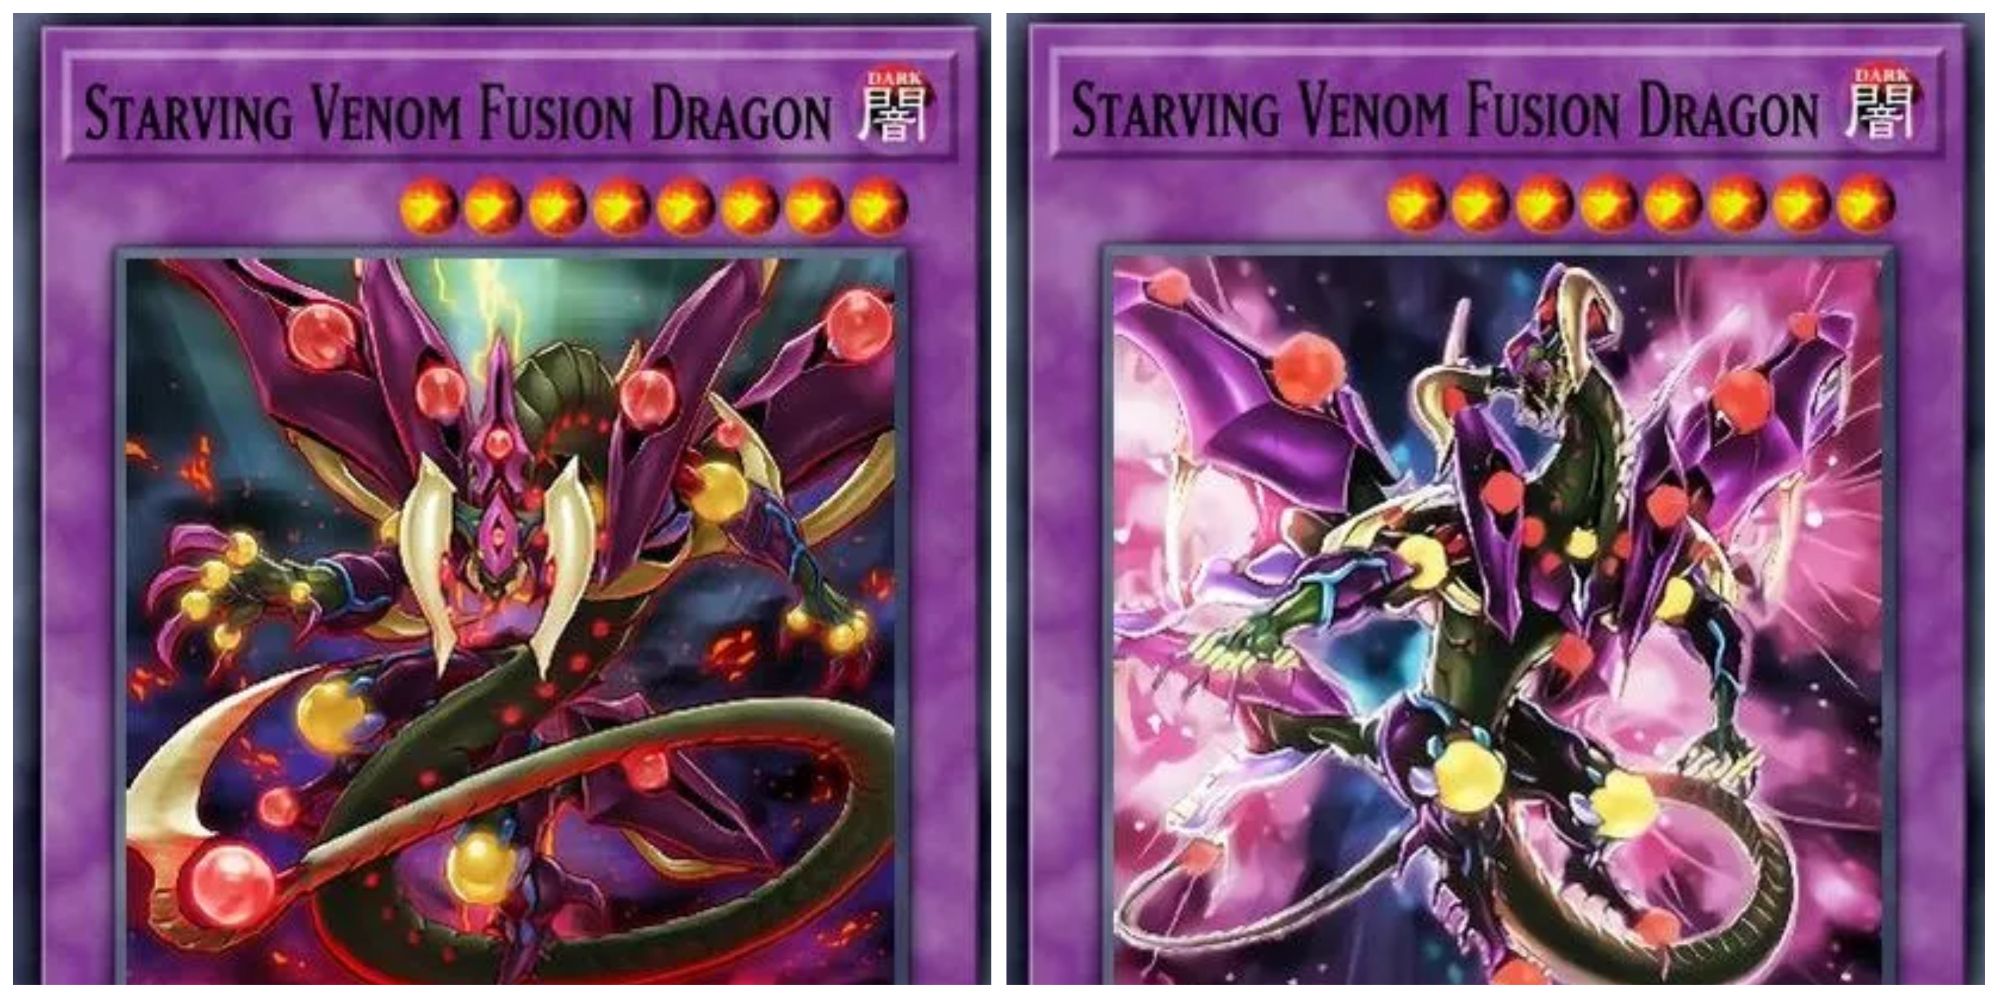 Starving Venom Fusion Dragon